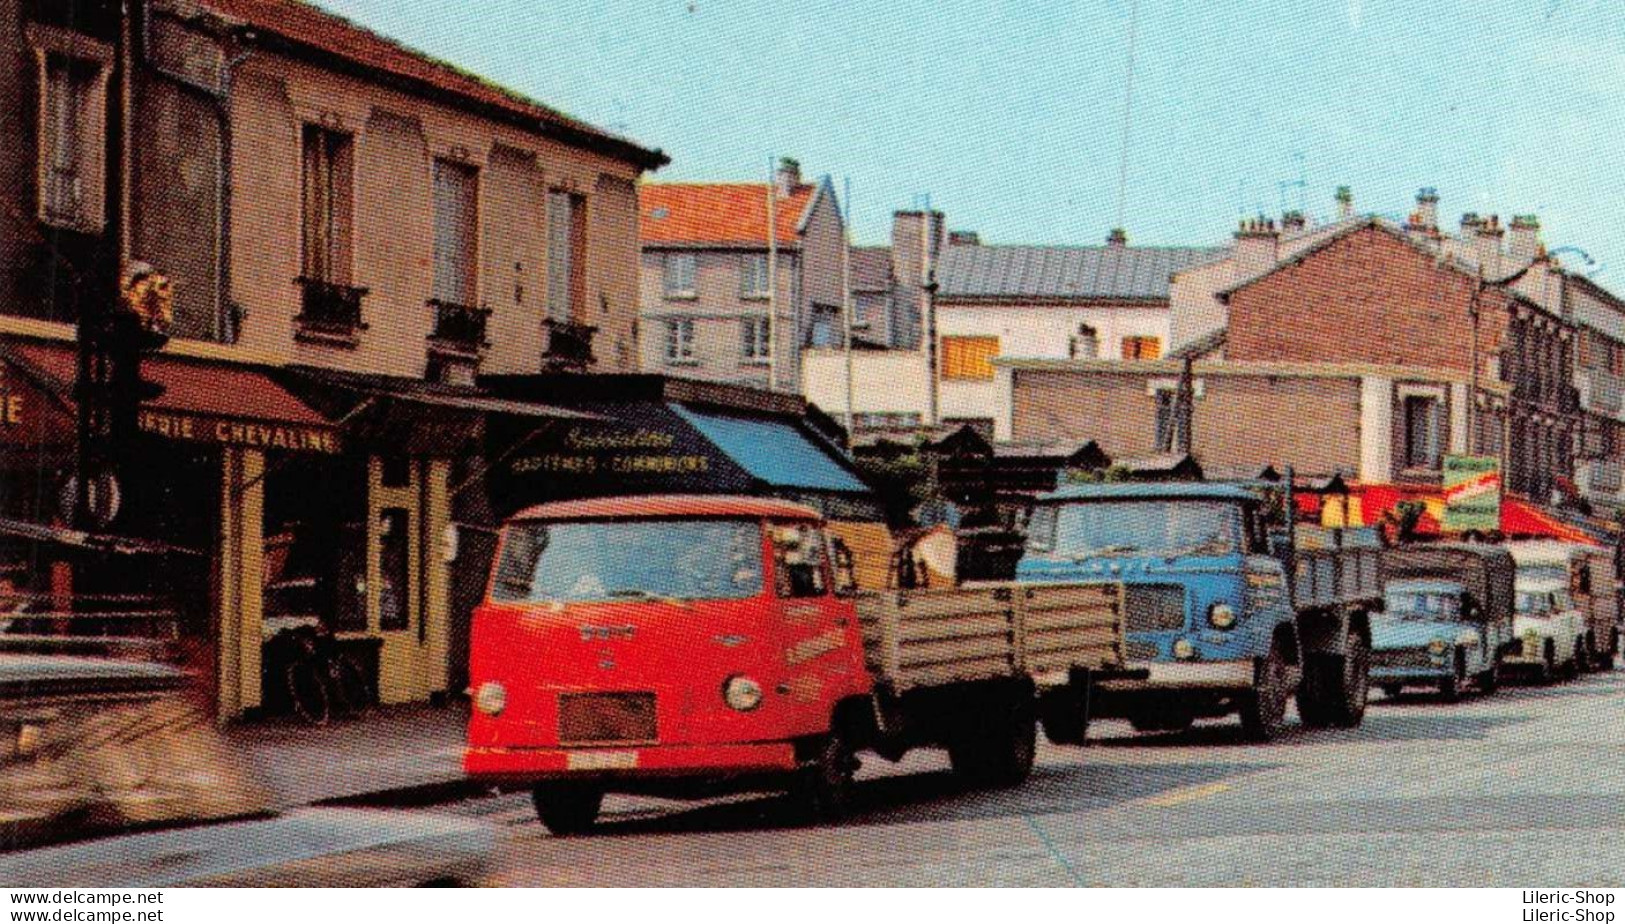 DRANCY (93) Avenue Henri-Barbusse. Camions / Trucks UNIC - # Automobiles # R8, 404, 2 Cv - Bar-Tabac "Le Chiquito" - Drancy